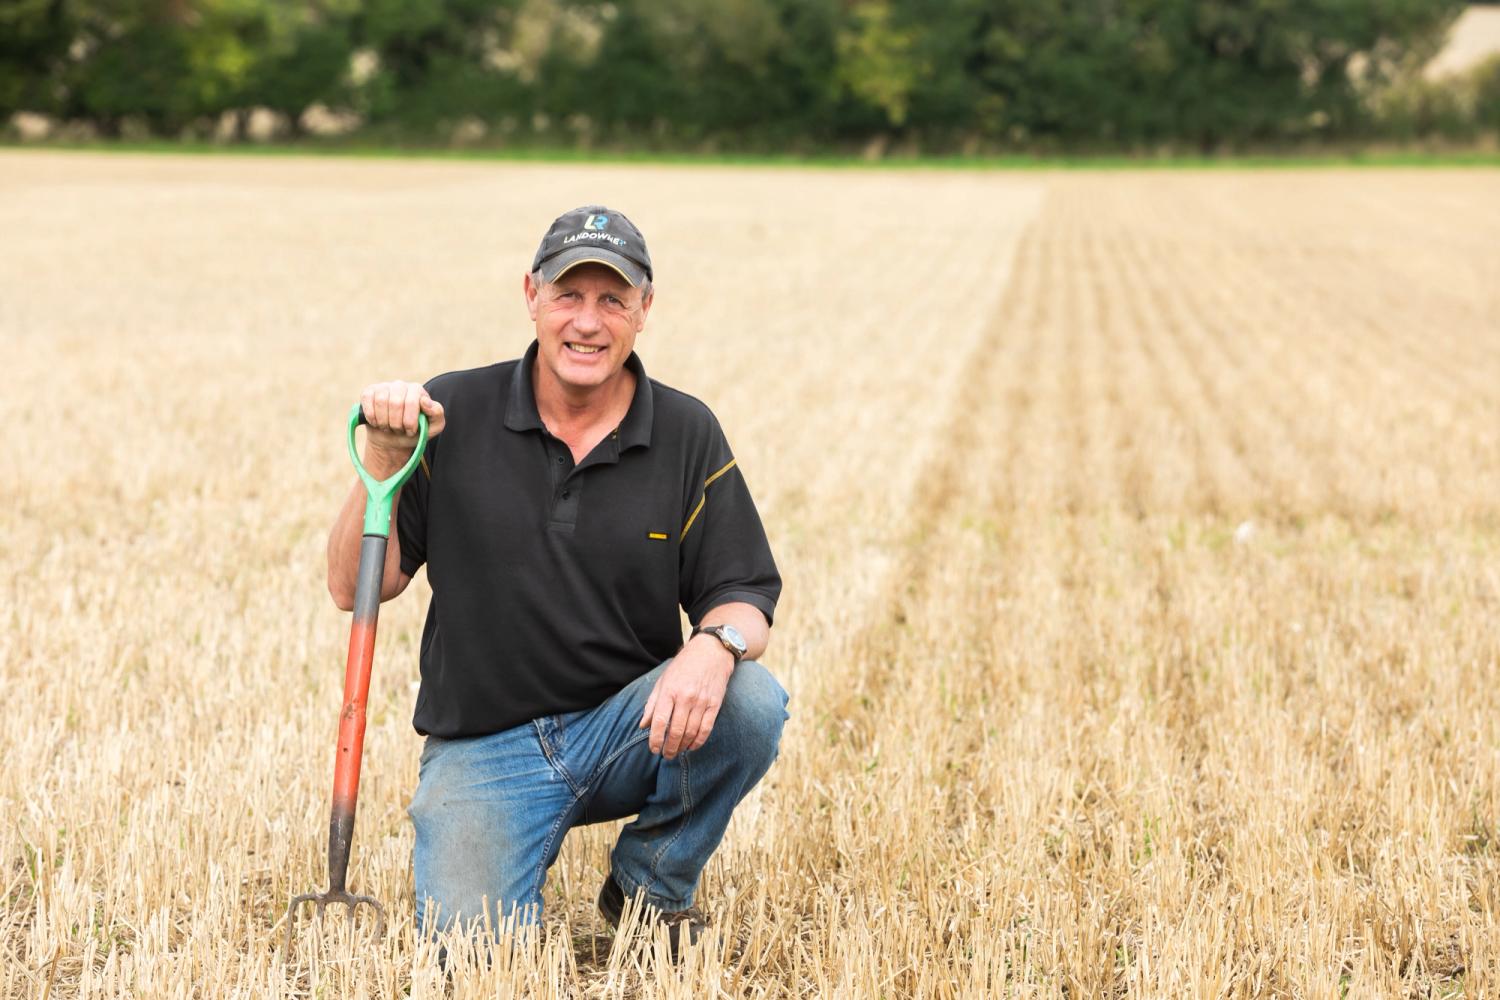 Farmer David Miller crouching down in field, holding a spade